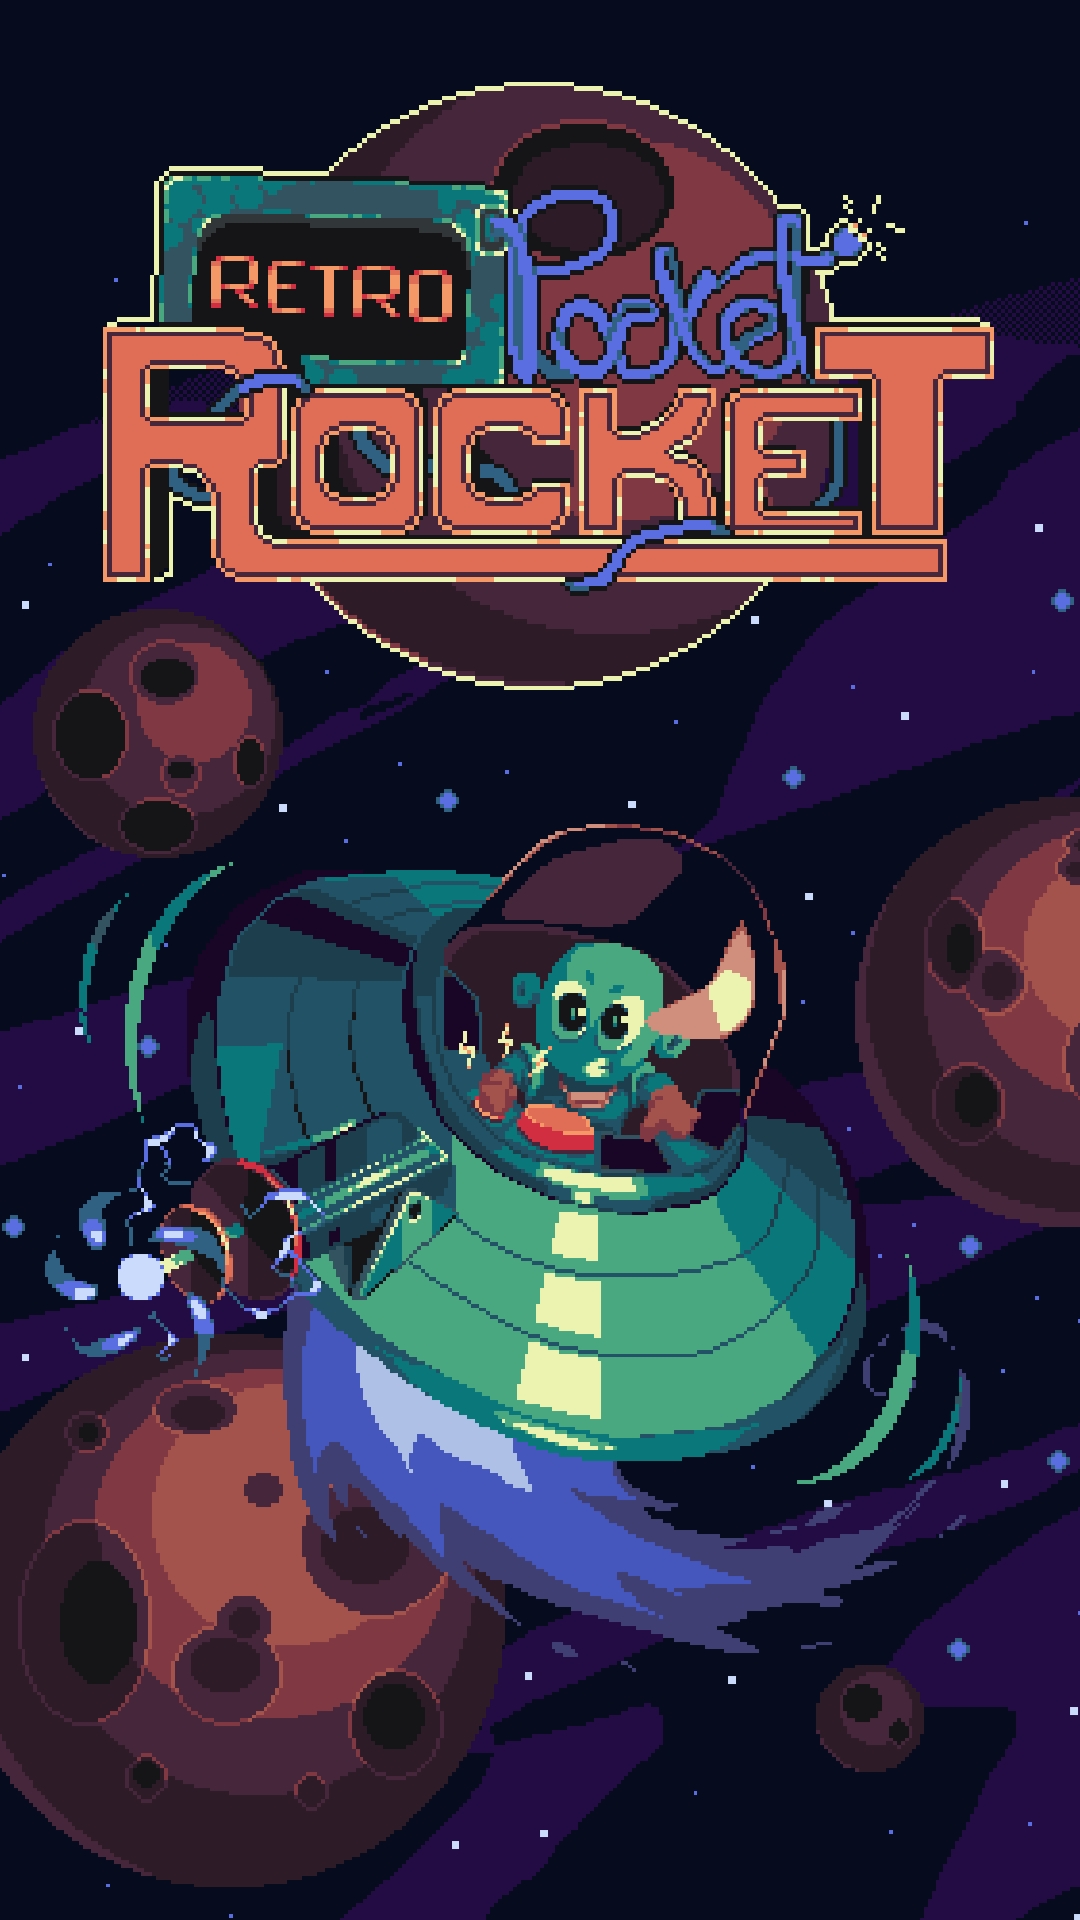 Baixar Retro Pocket Rocket para Android grátis.